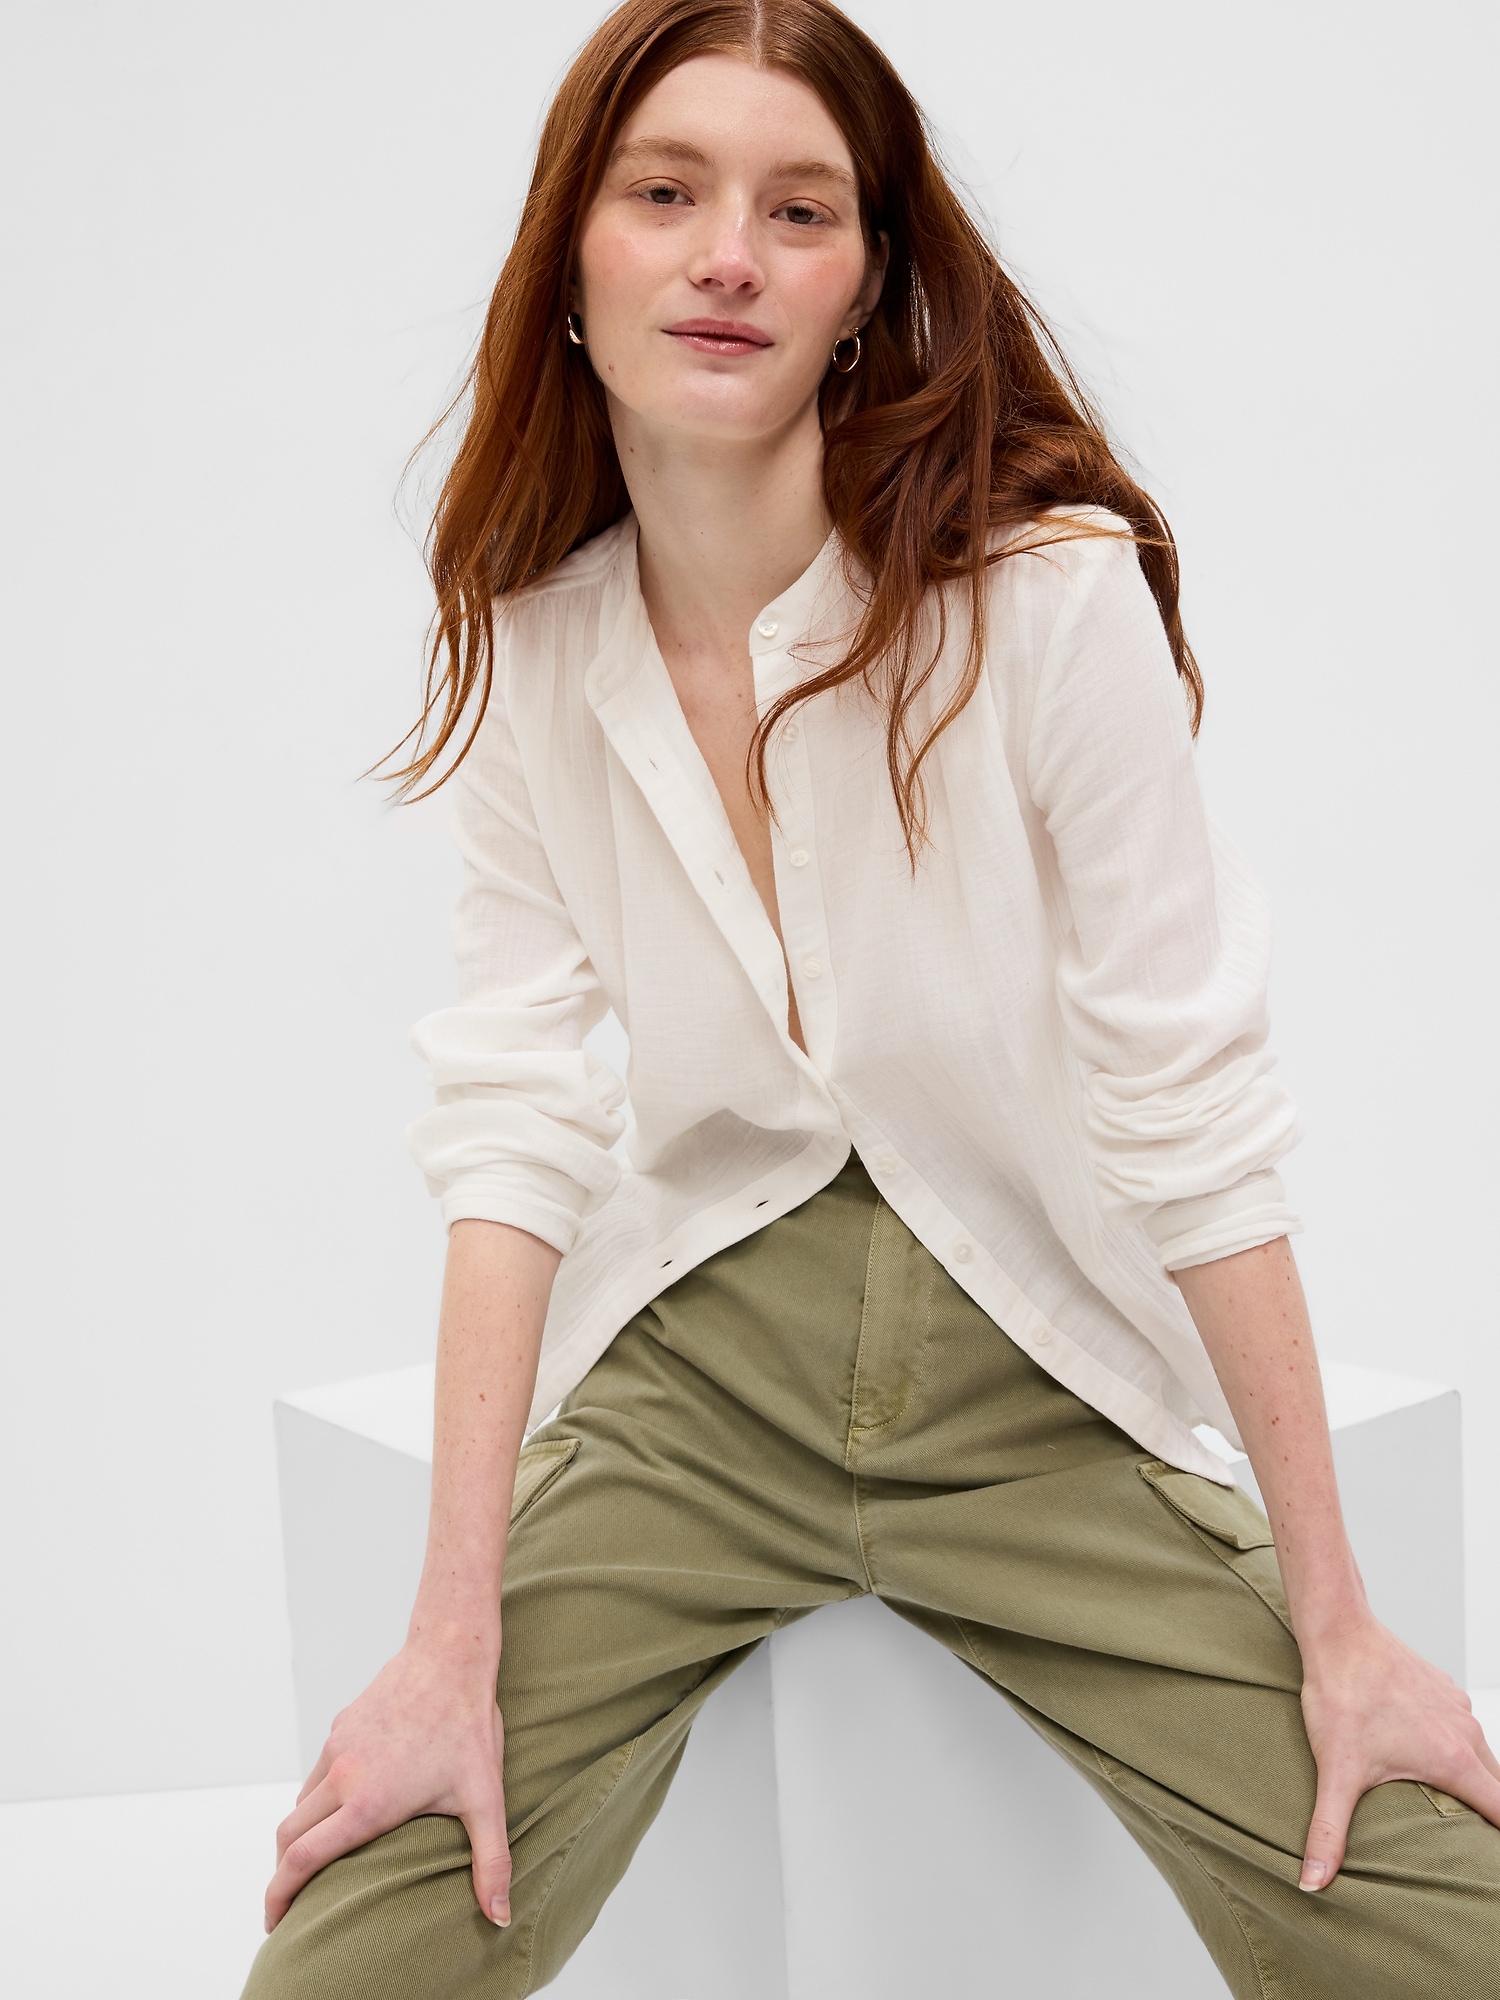 Buy Gap Linen-Cotton Long Sleeve Shirt from the Gap online shop